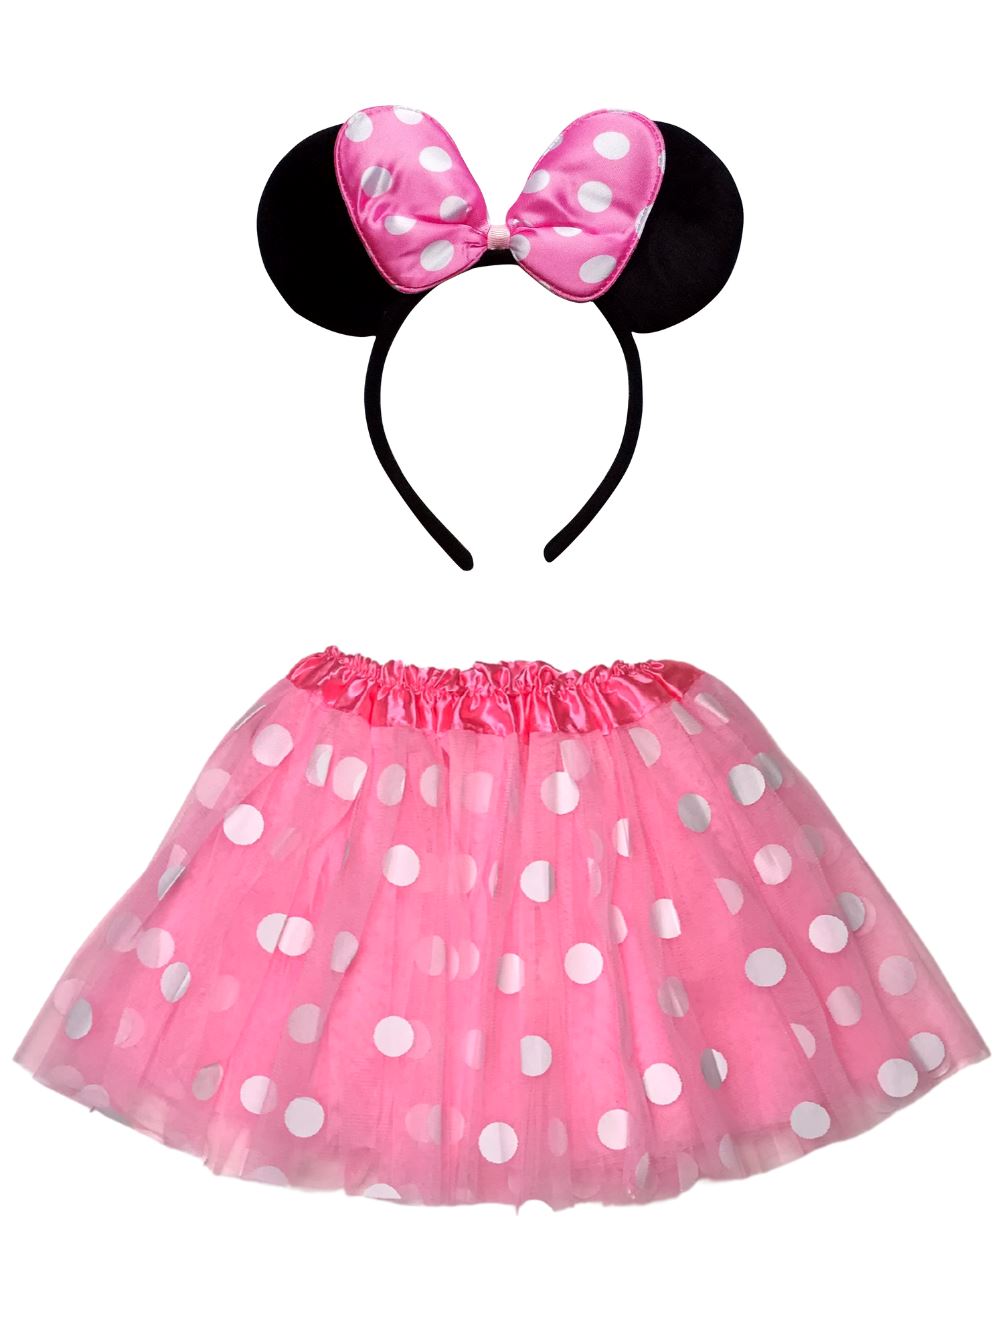 Minnie Mouse Costume - Girls Light Pink Polka Dot Mouse Tutu Kids Costume Set - Sydney So Sweet